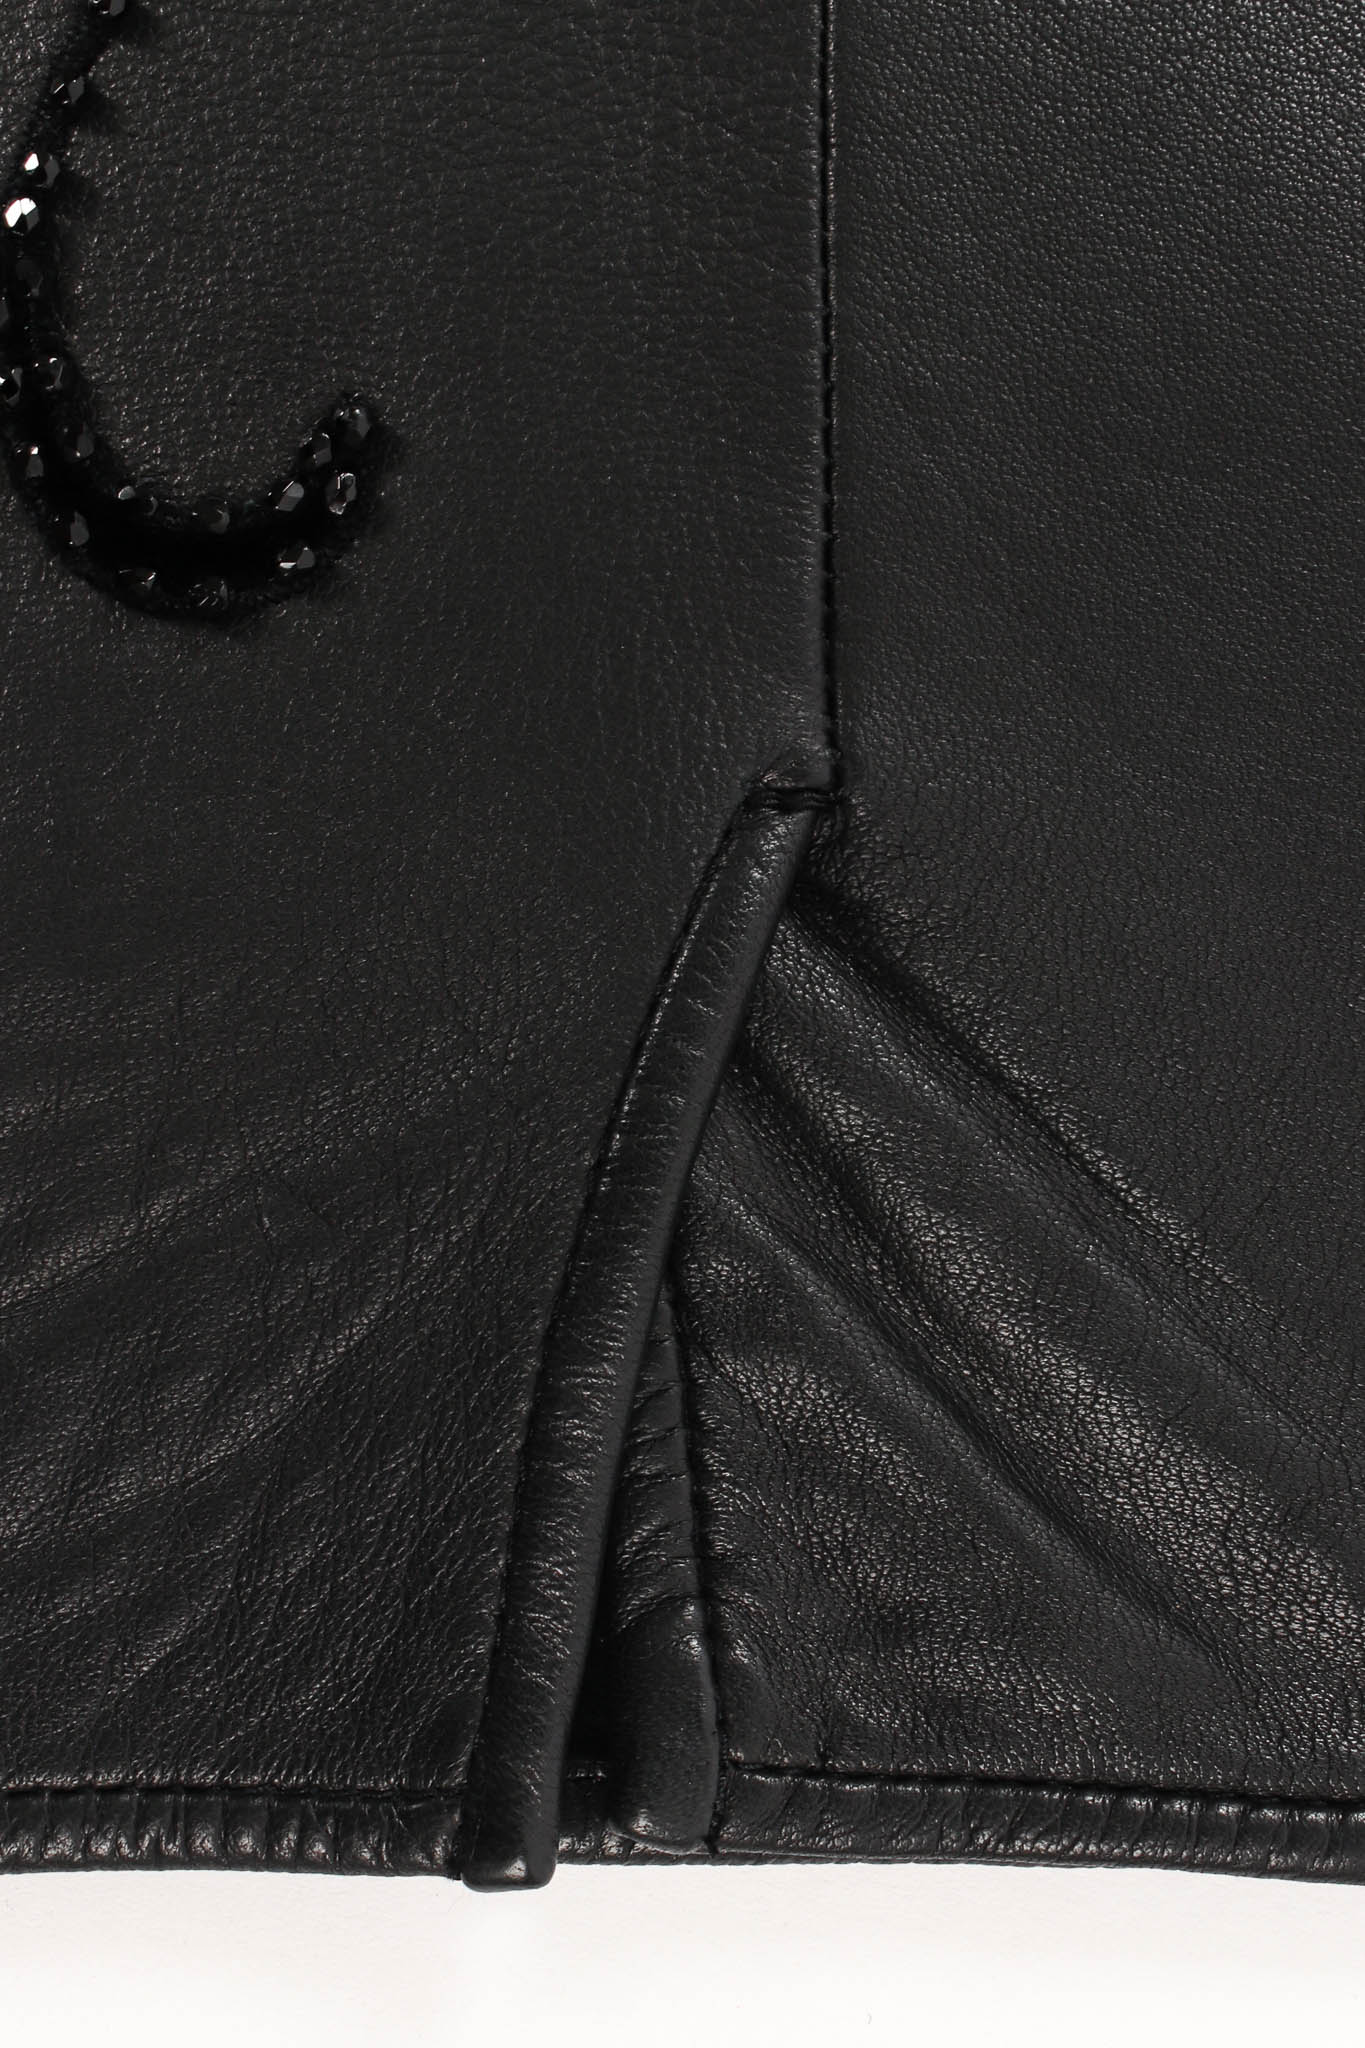 Vintage Valentino 1985 A/W Leather Fleur Beaded Top & Skirt back vent slit @ Recess LA